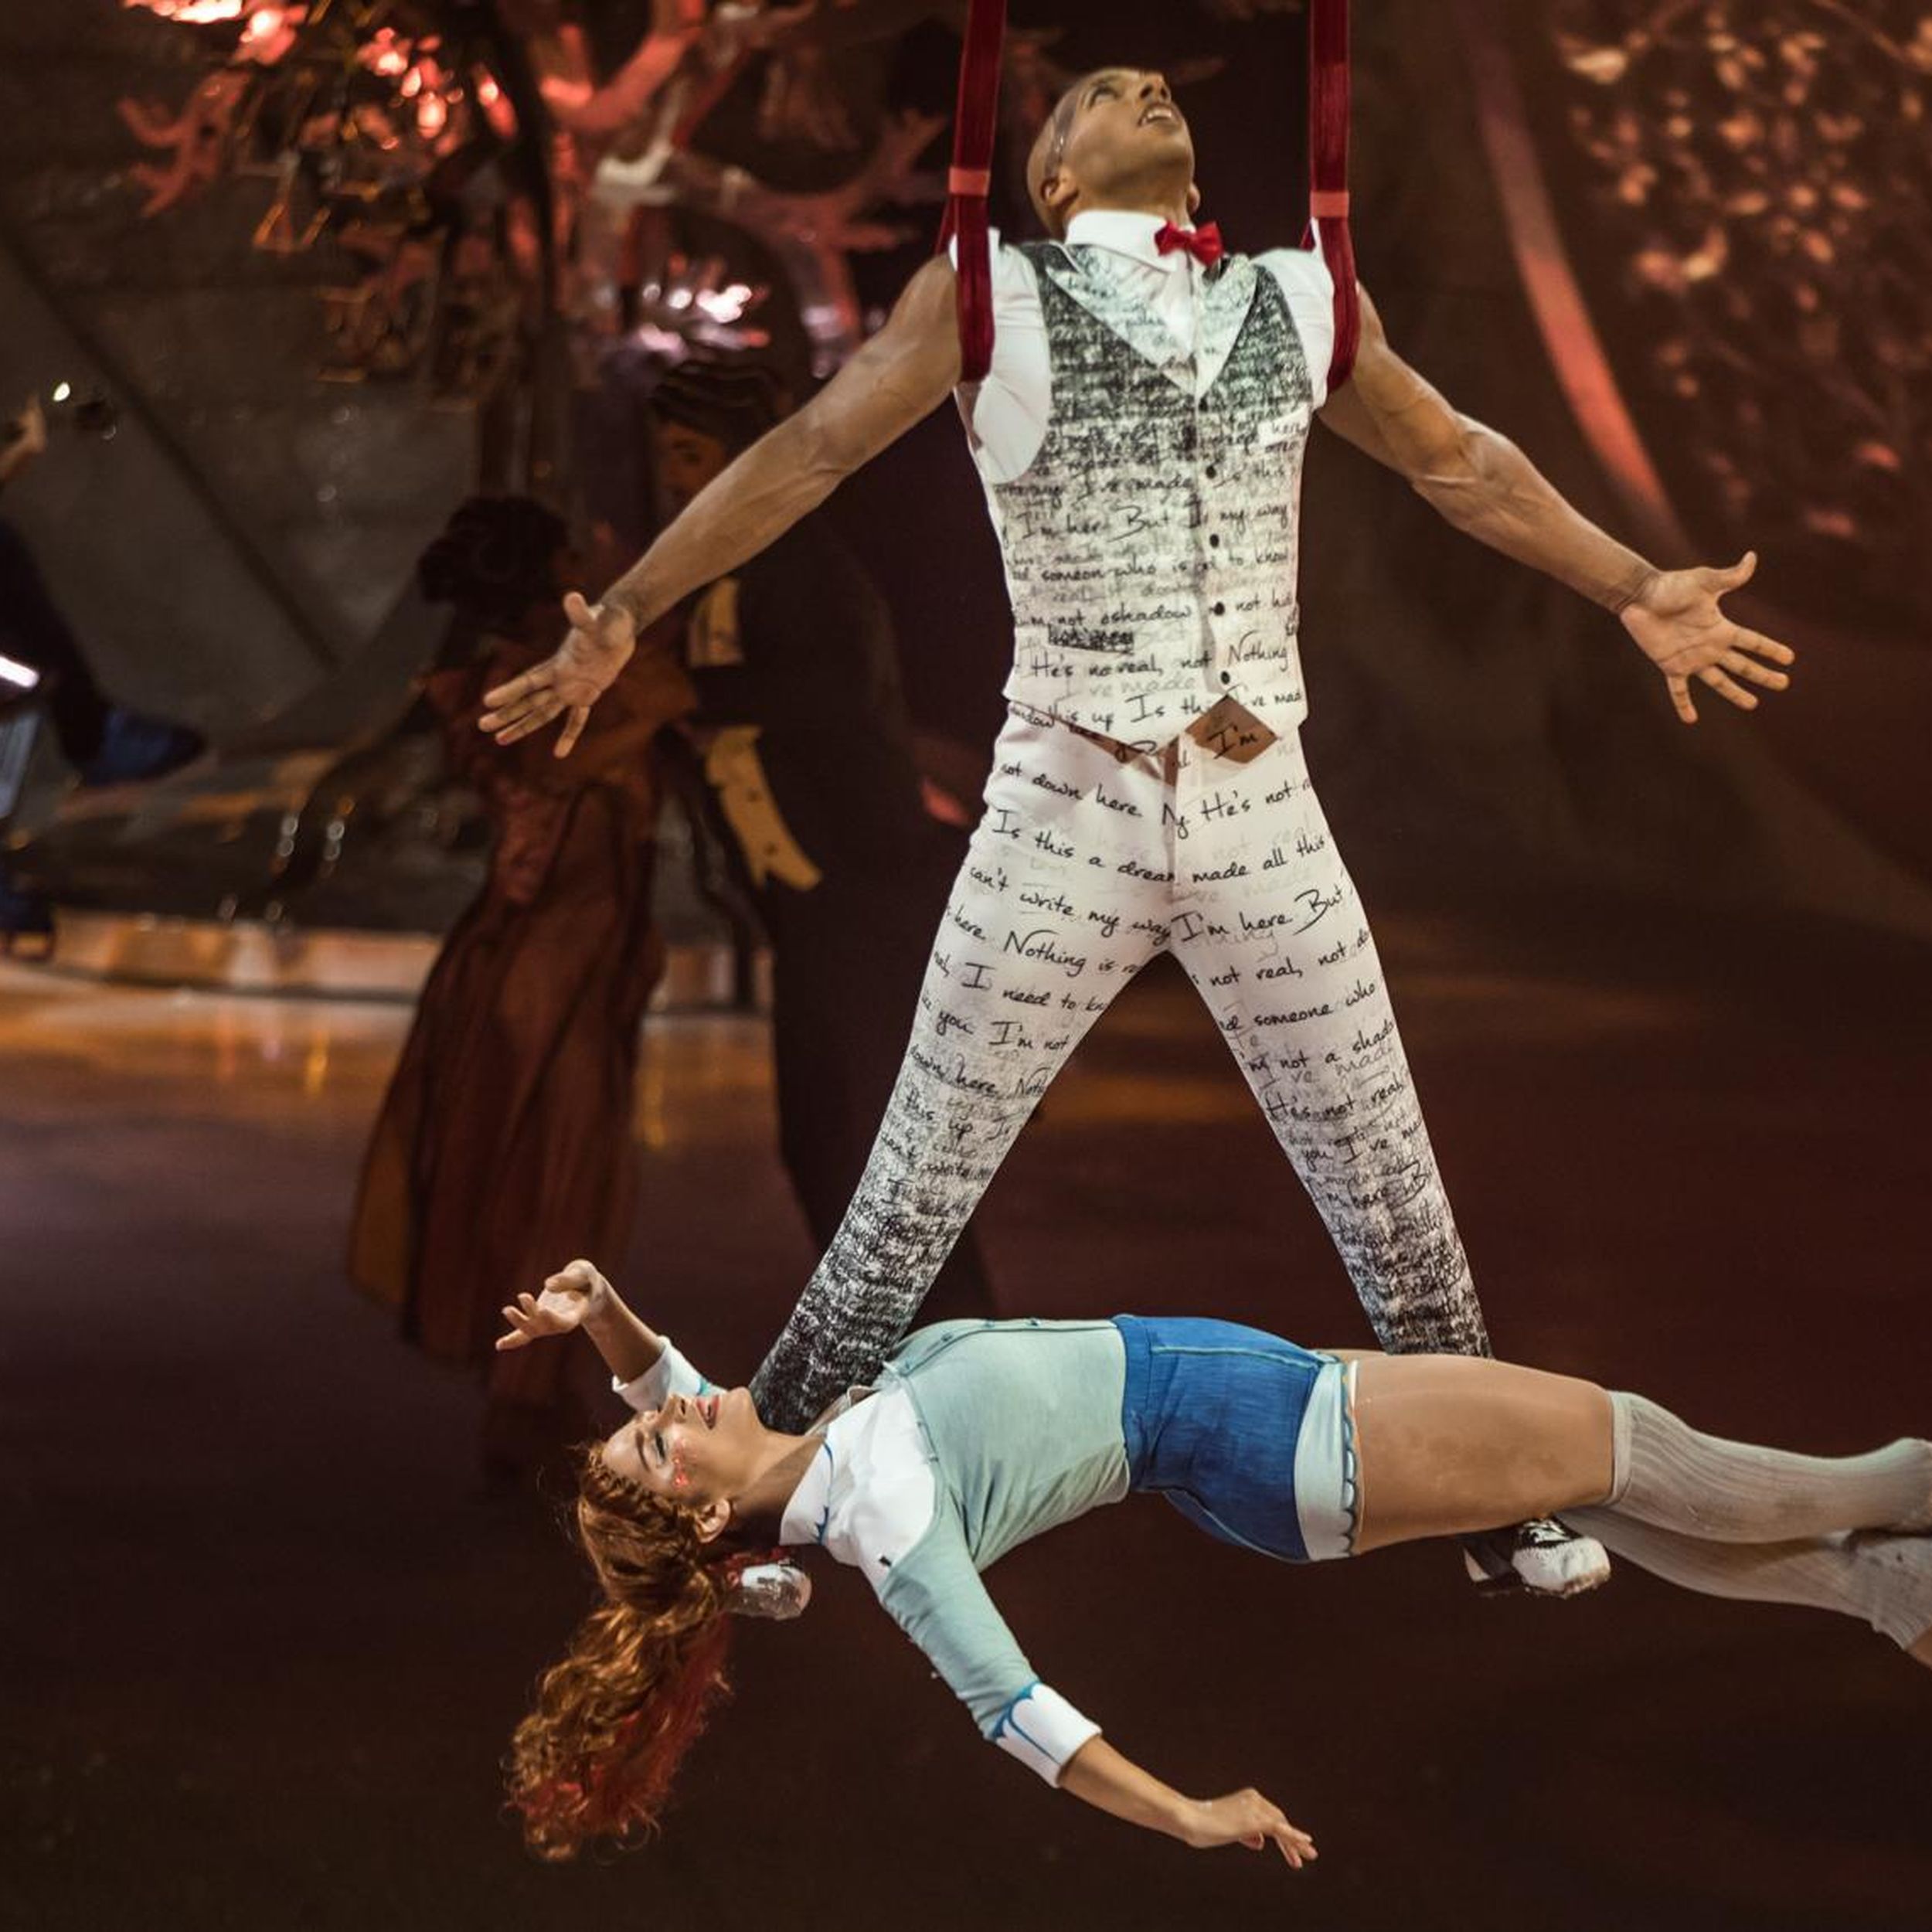 Cirque du Soleil returns to Seattle next week with a brand new show